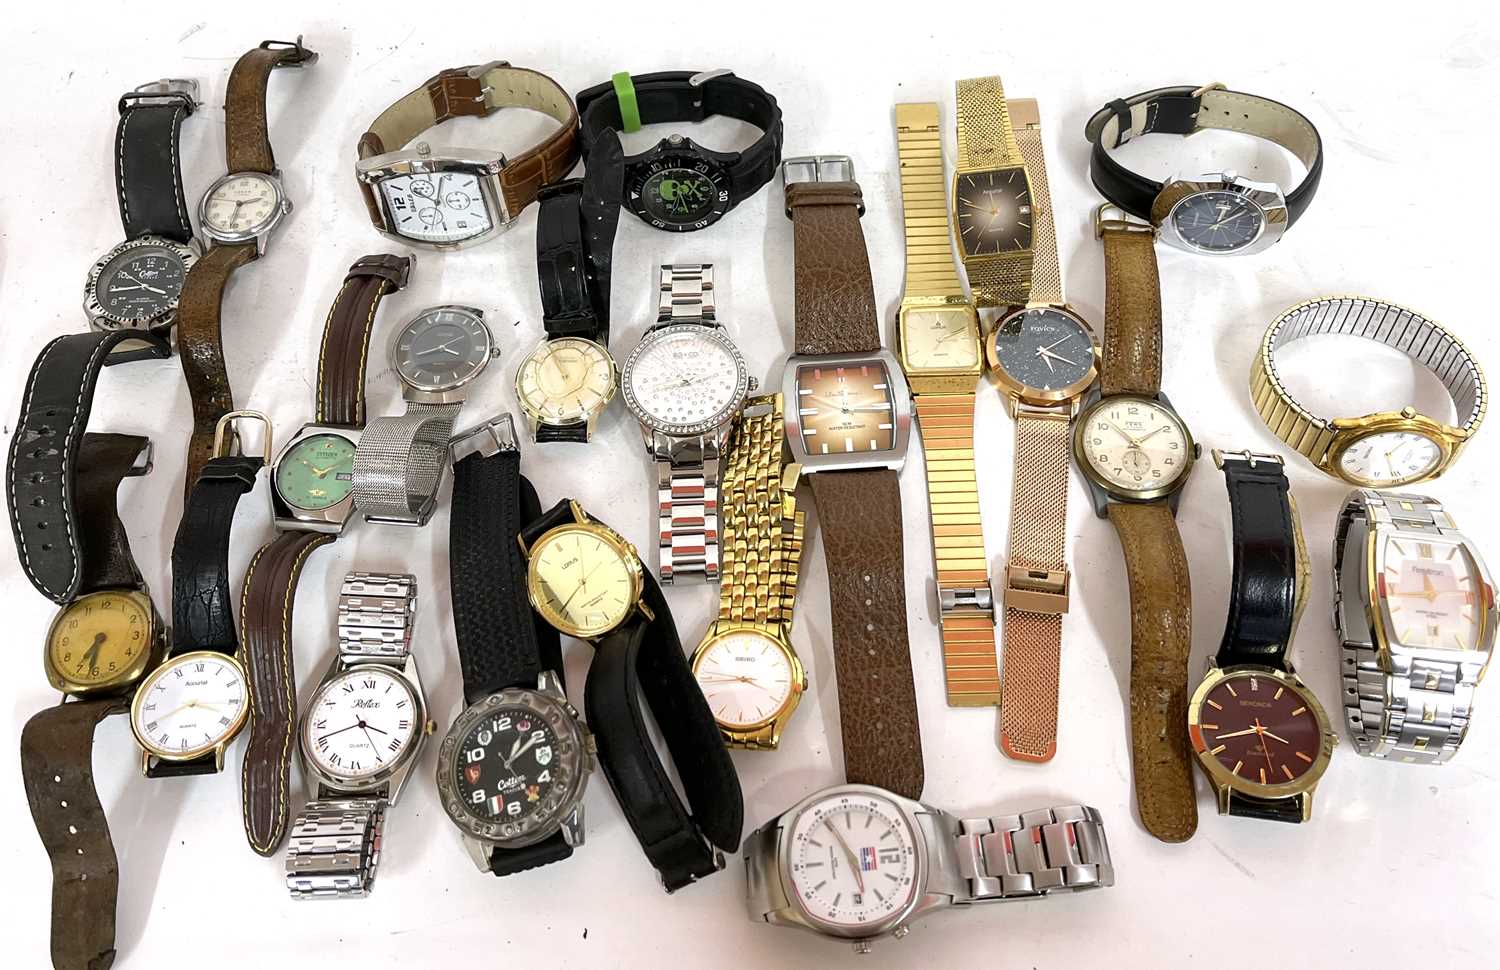 Mixed lot of various wrist watches, makes include Seiko, Theros, Lorus and Sekonda